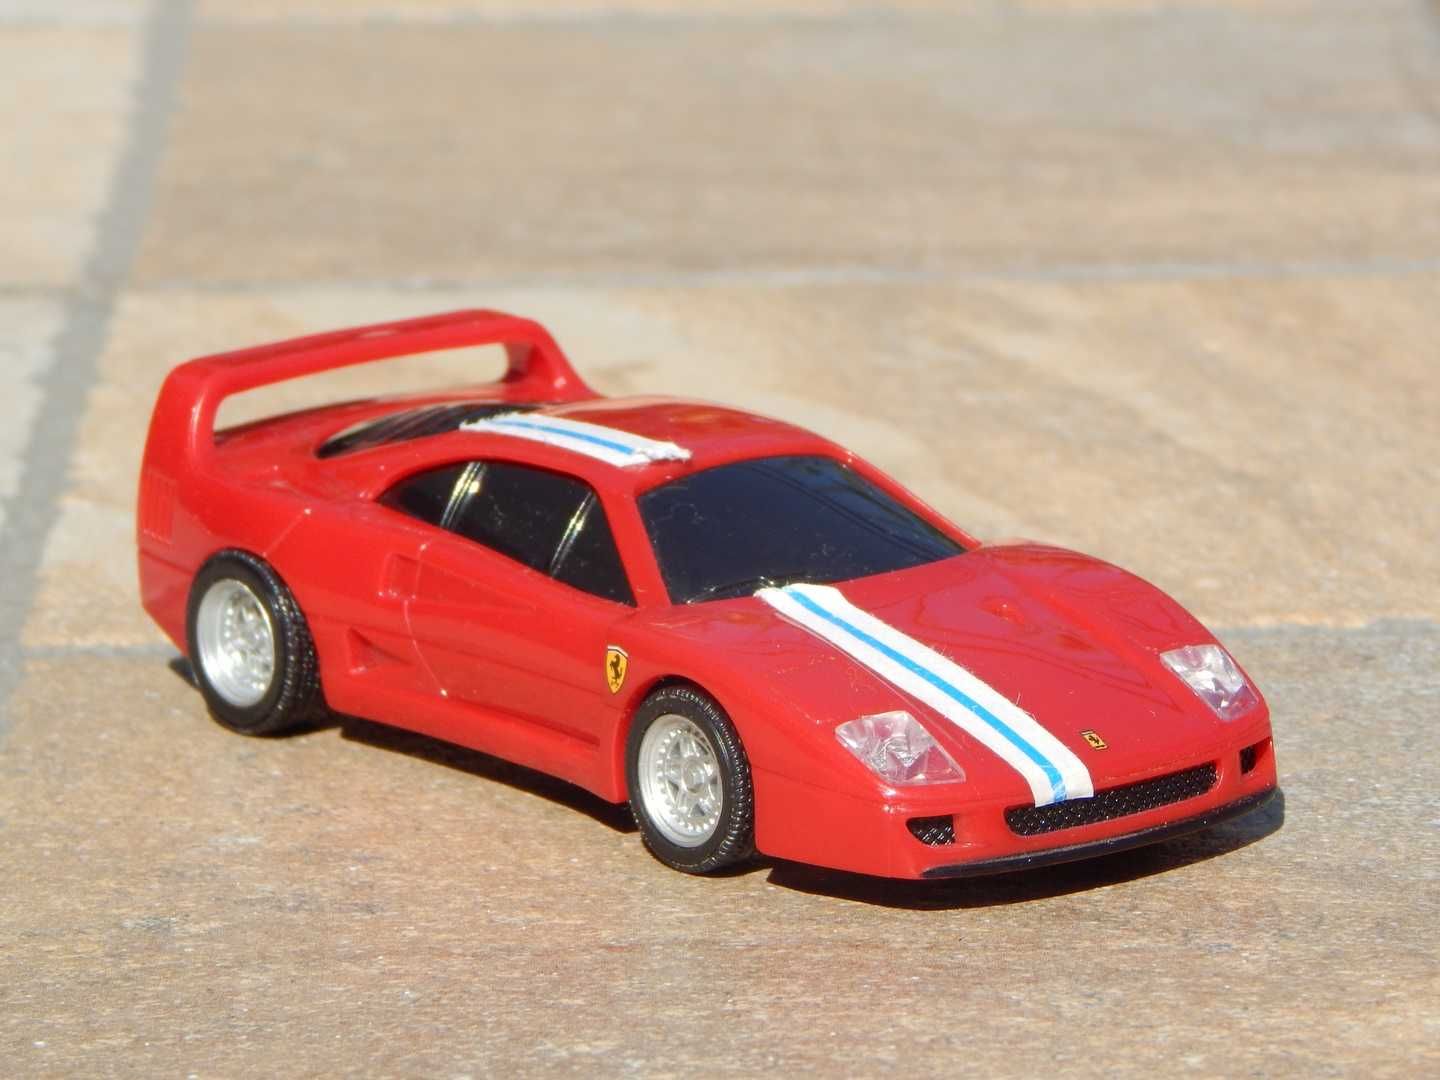 Macheta jucarie Ferrari F40 Hot Wheels 1:38 V Power Shell